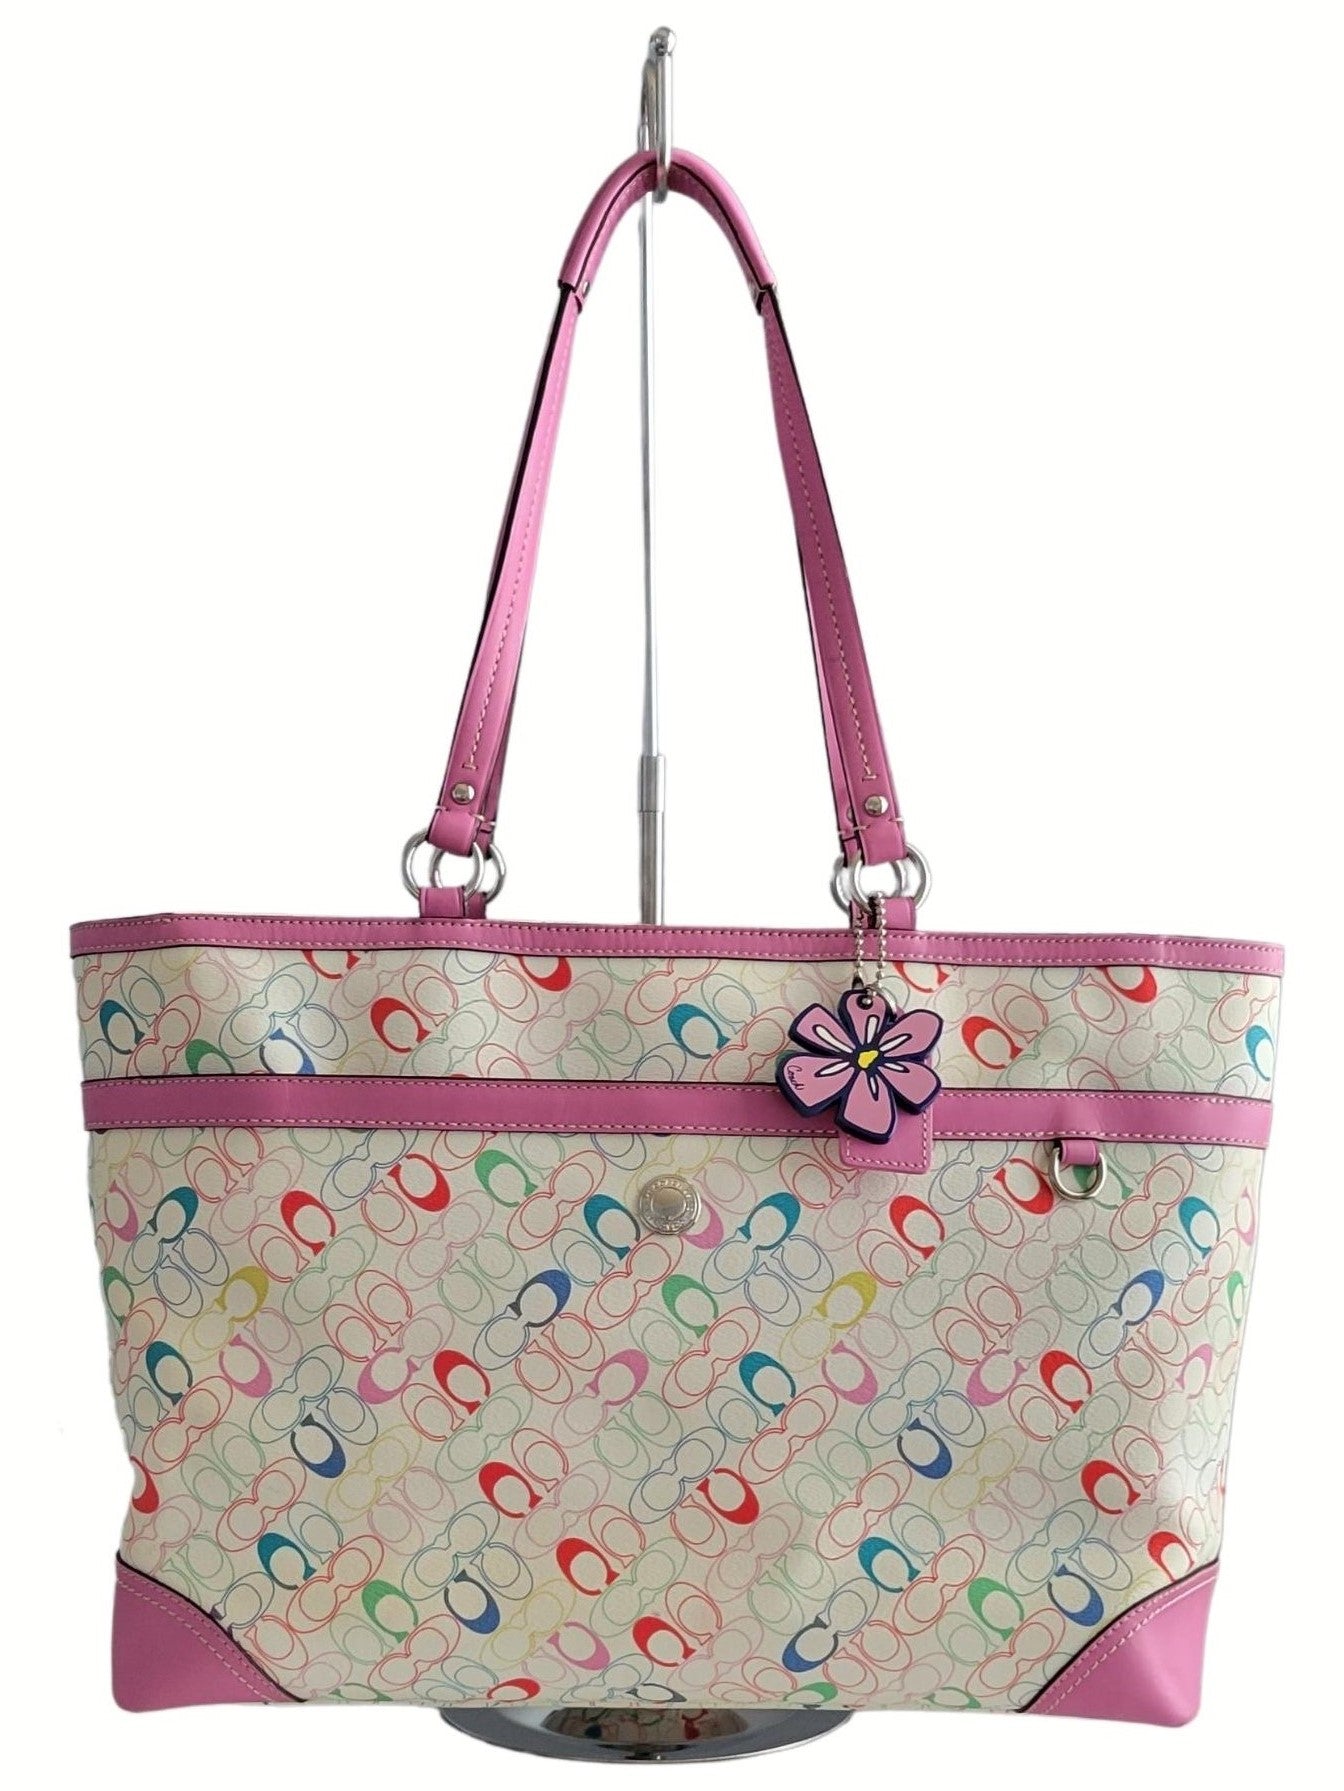 Michael Kors - Authenticated Handbag - Cloth Pink for Women, Never Worn